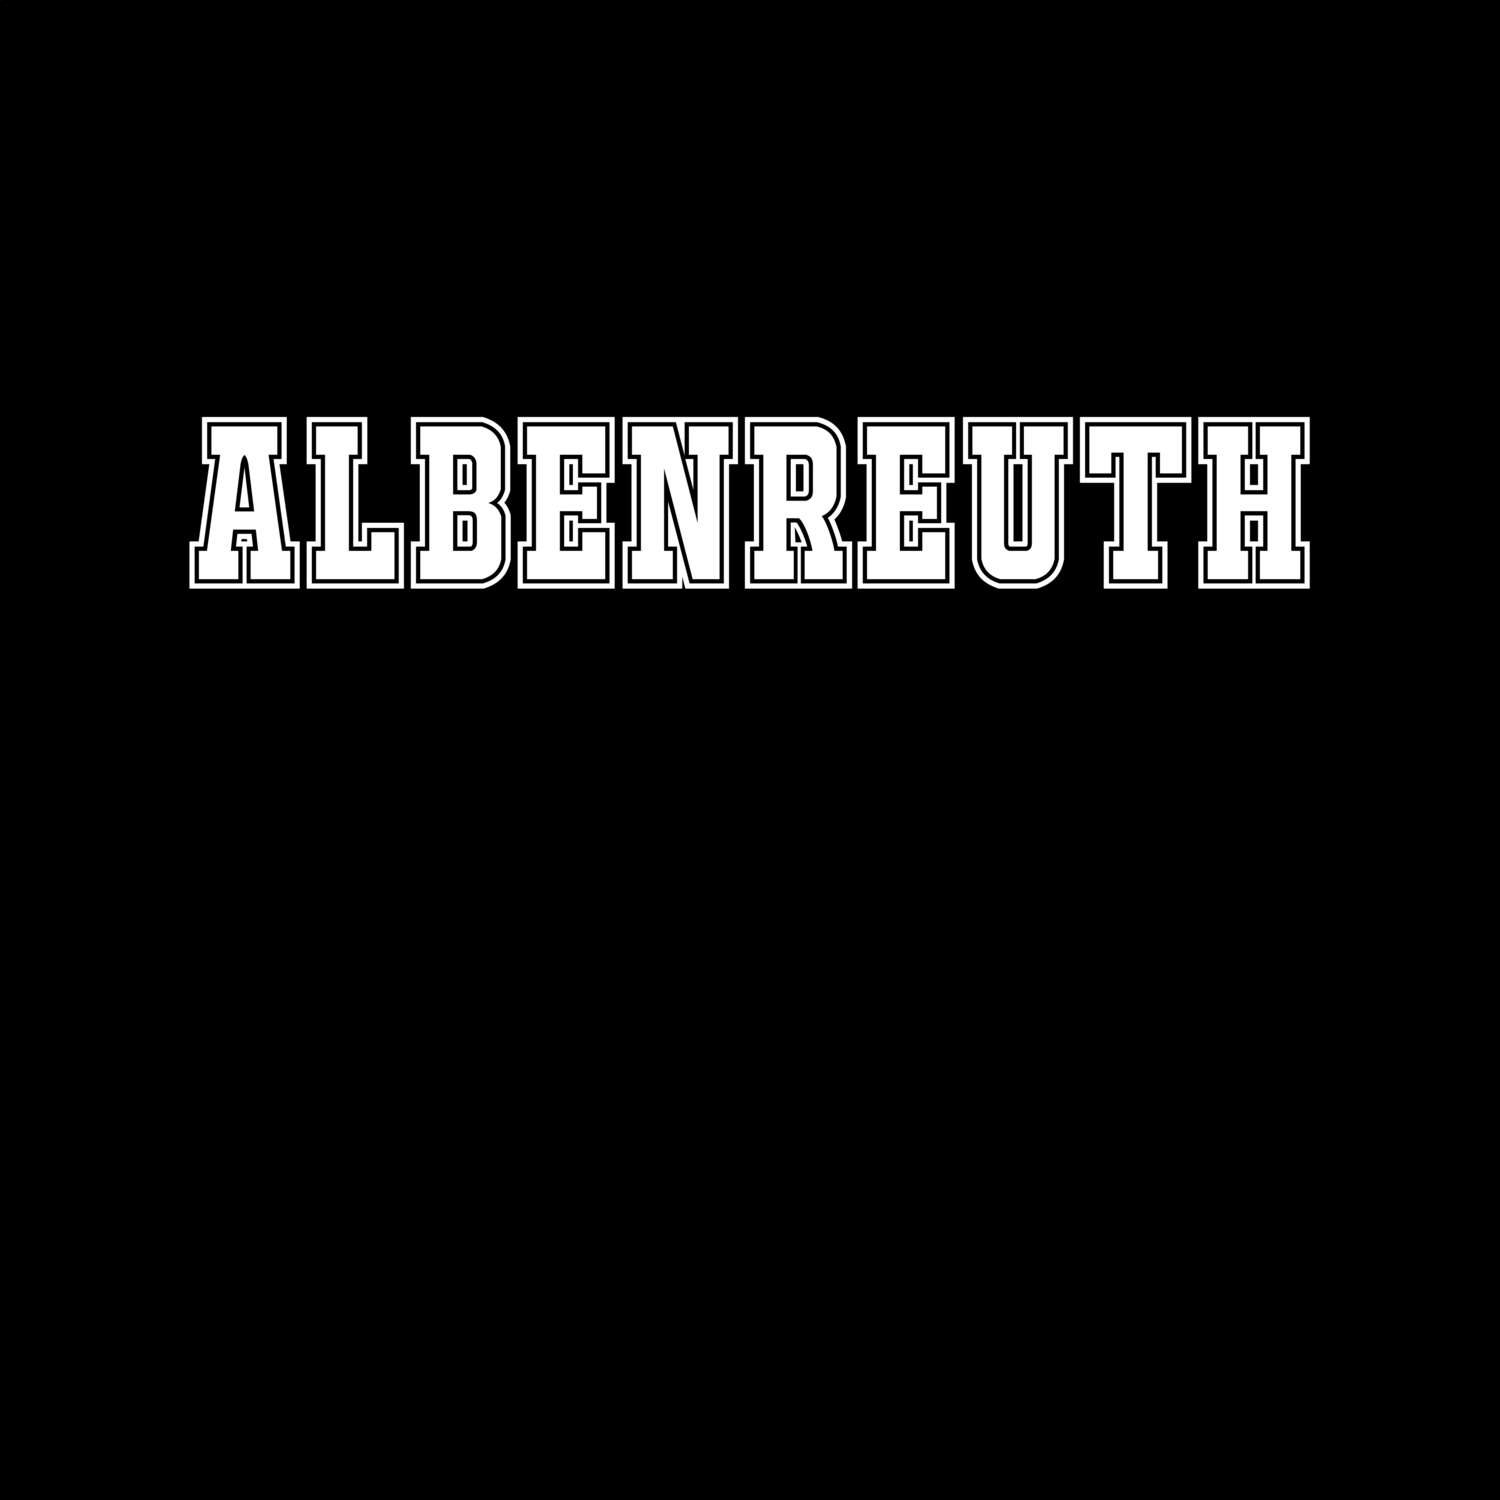 Albenreuth T-Shirt »Classic«